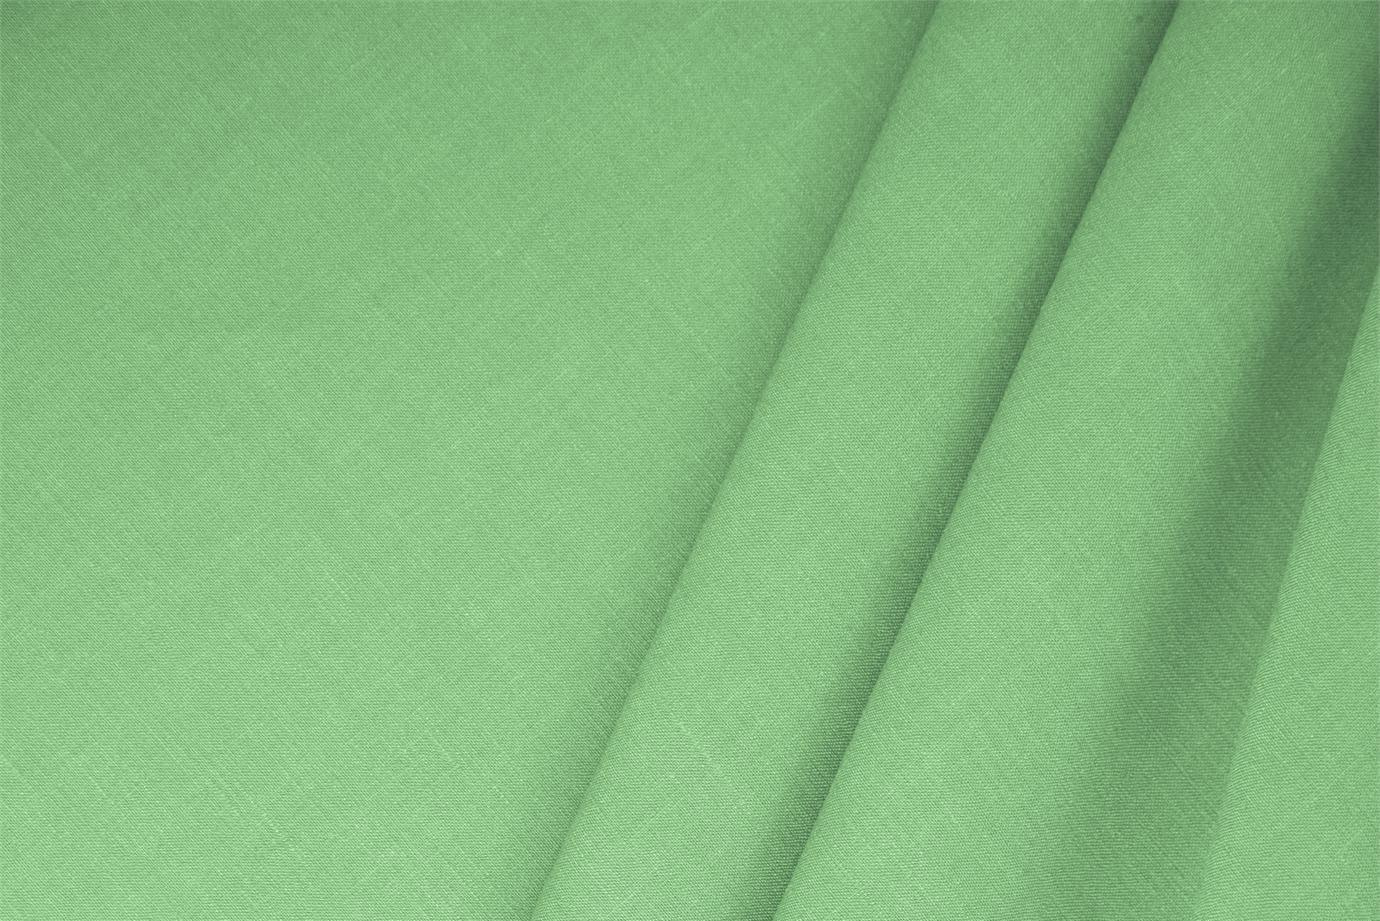 Maldive Green Linen, Stretch, Viscose Linen Blend fabric for dressmaking